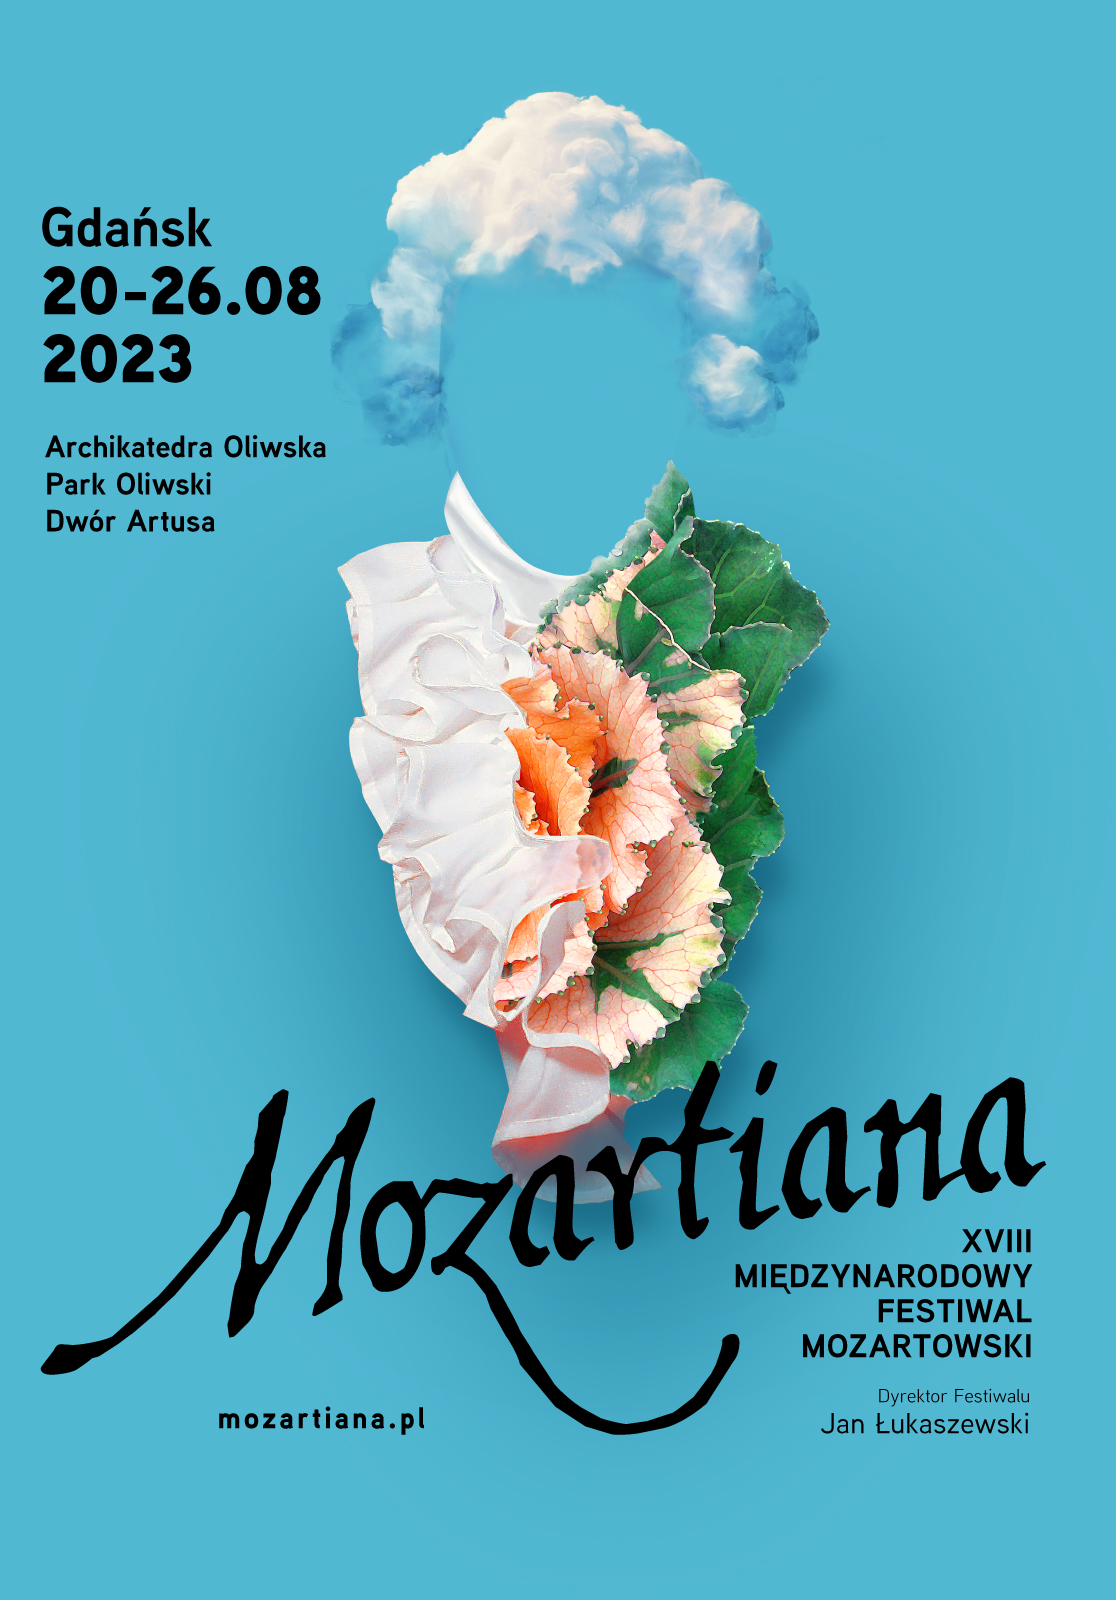 18th International Mozart Festival Mozartiana 